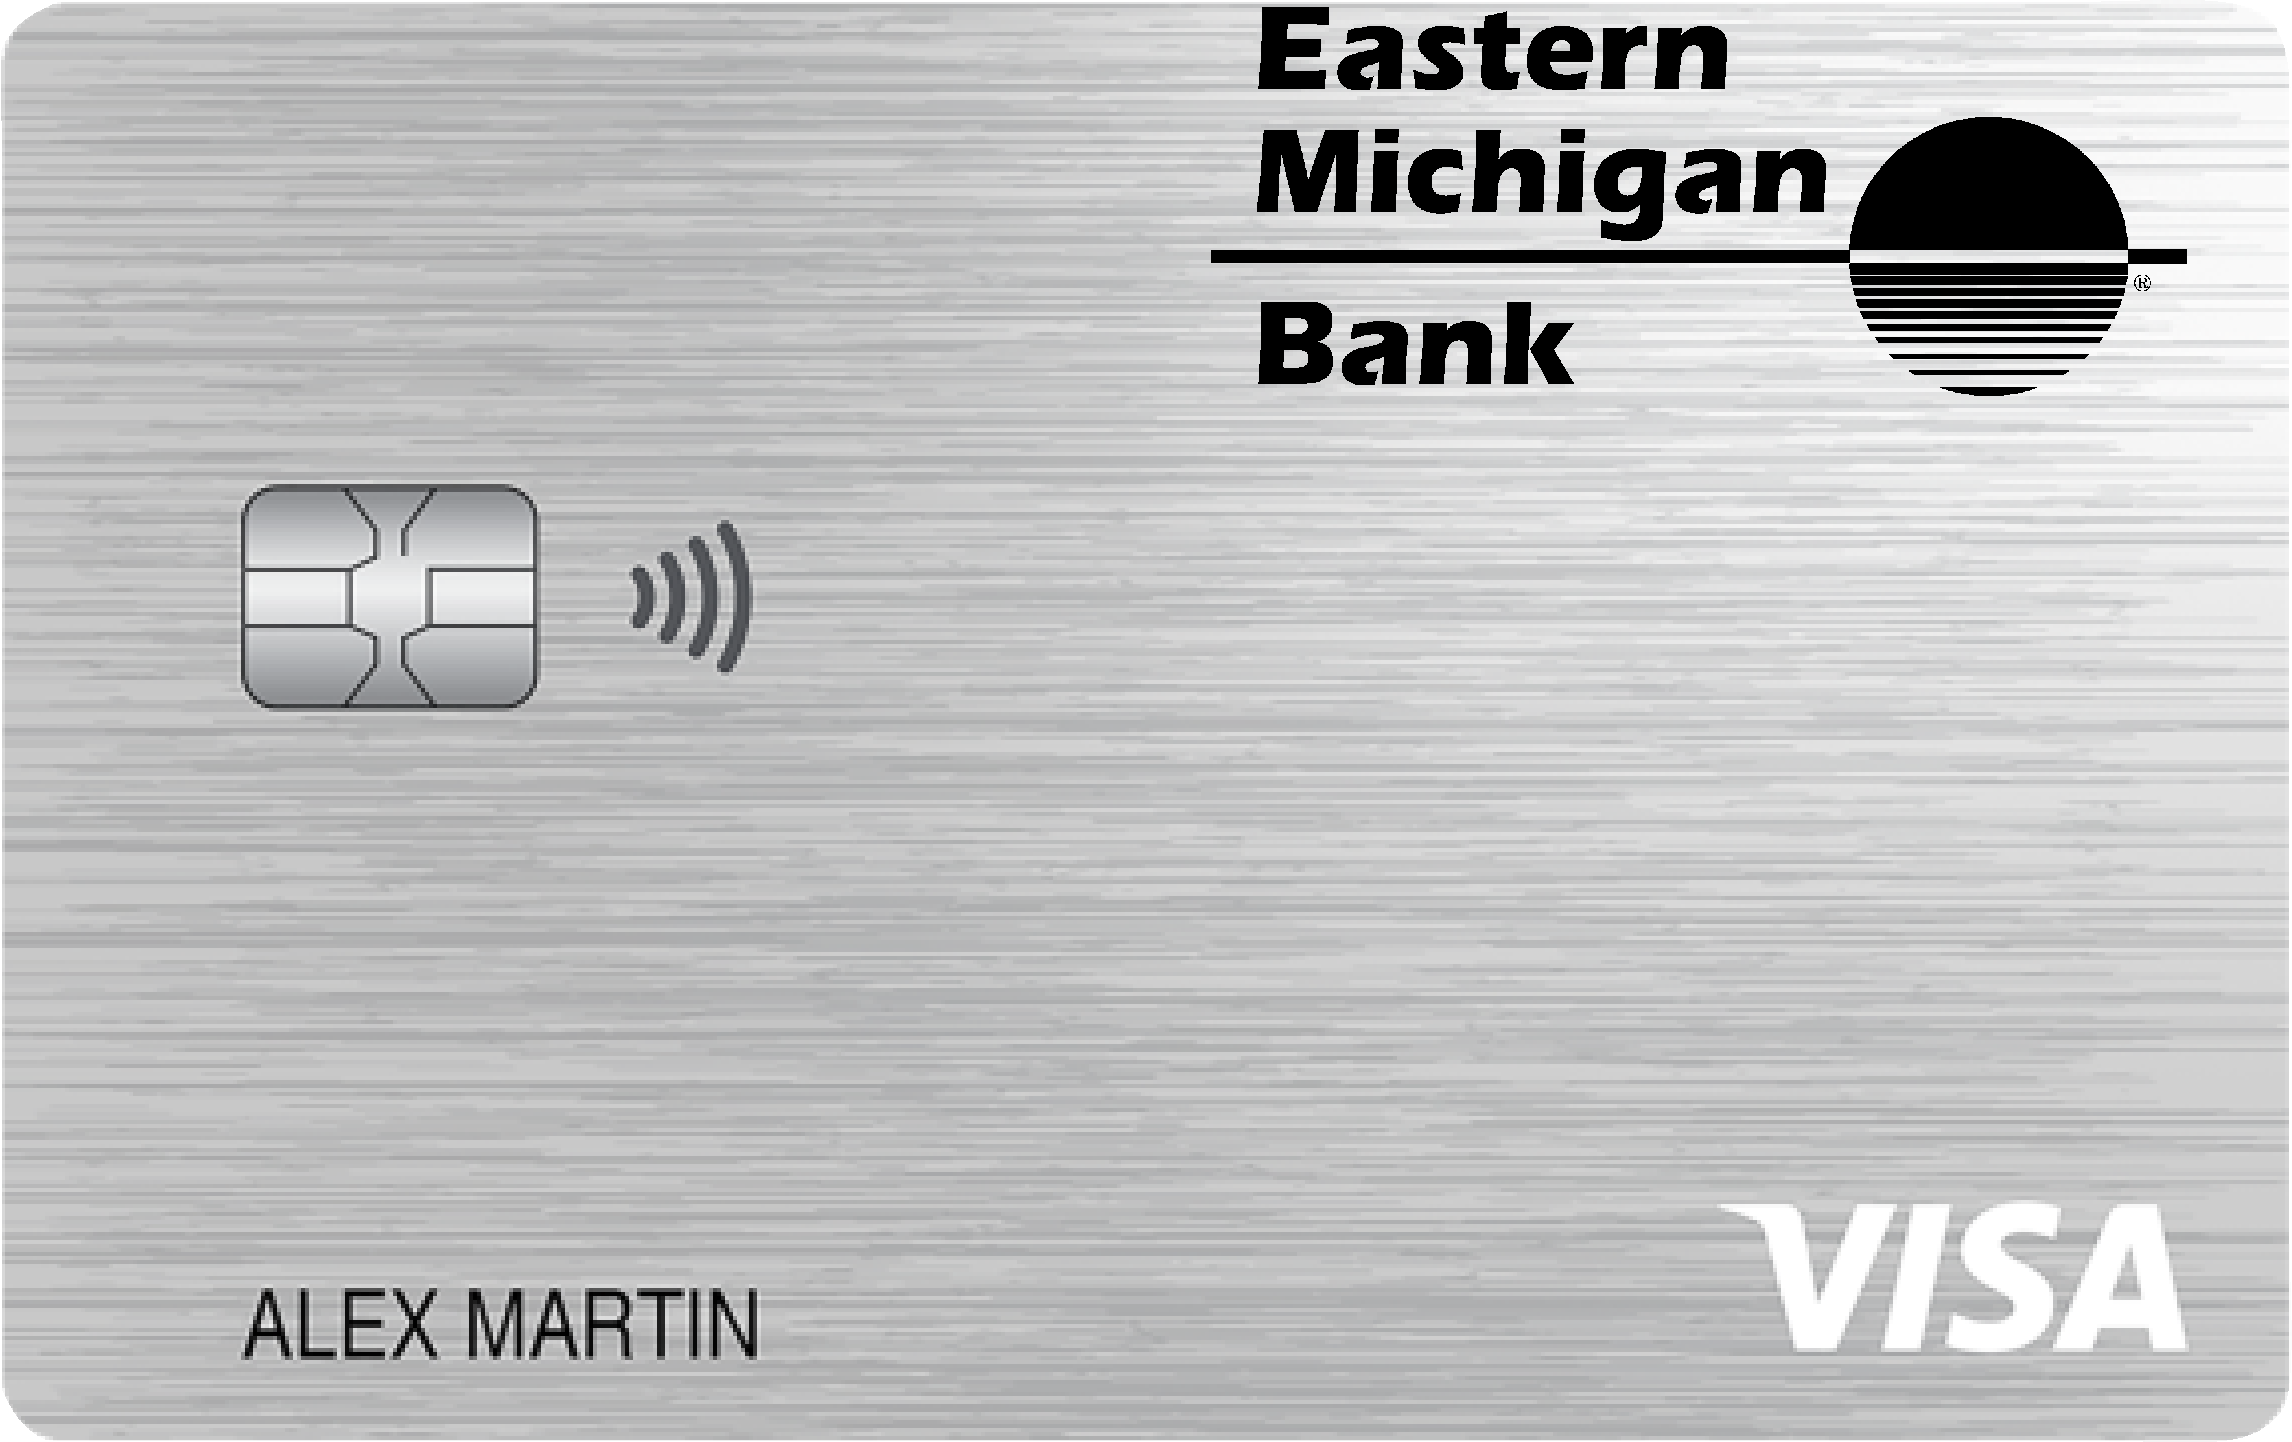 Eastern Michigan Bank